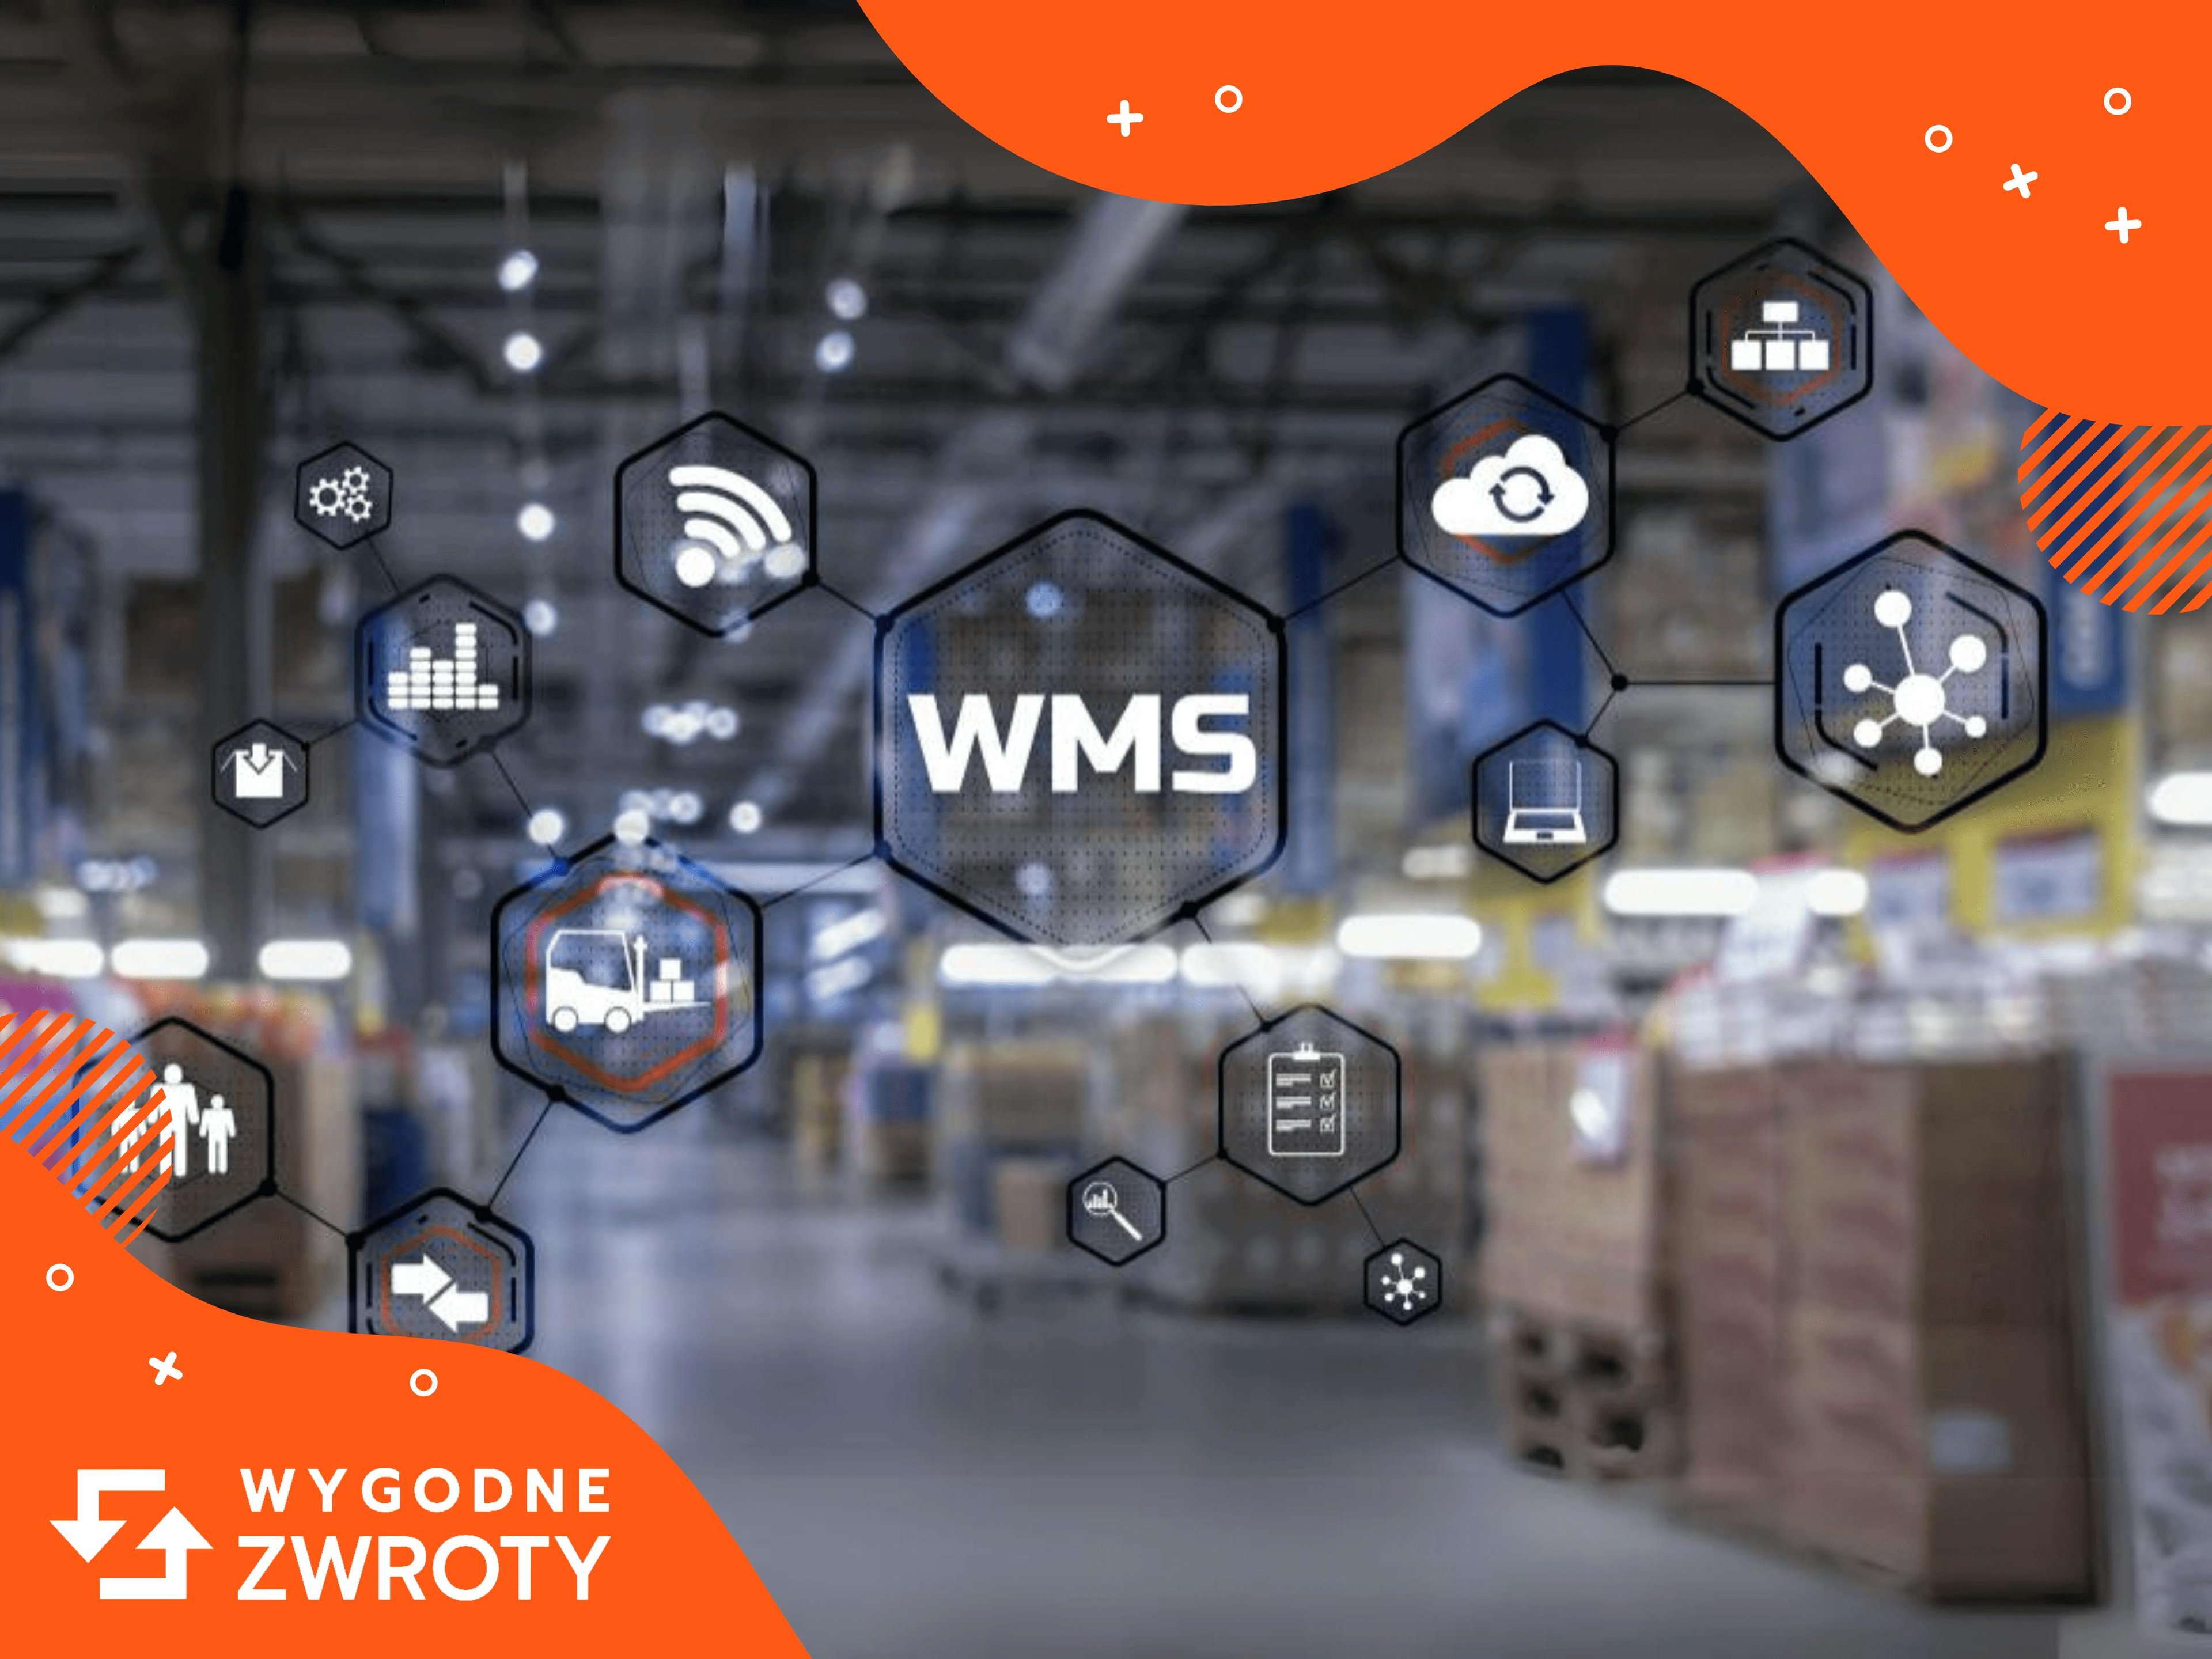 System WMS - Warehouse Management